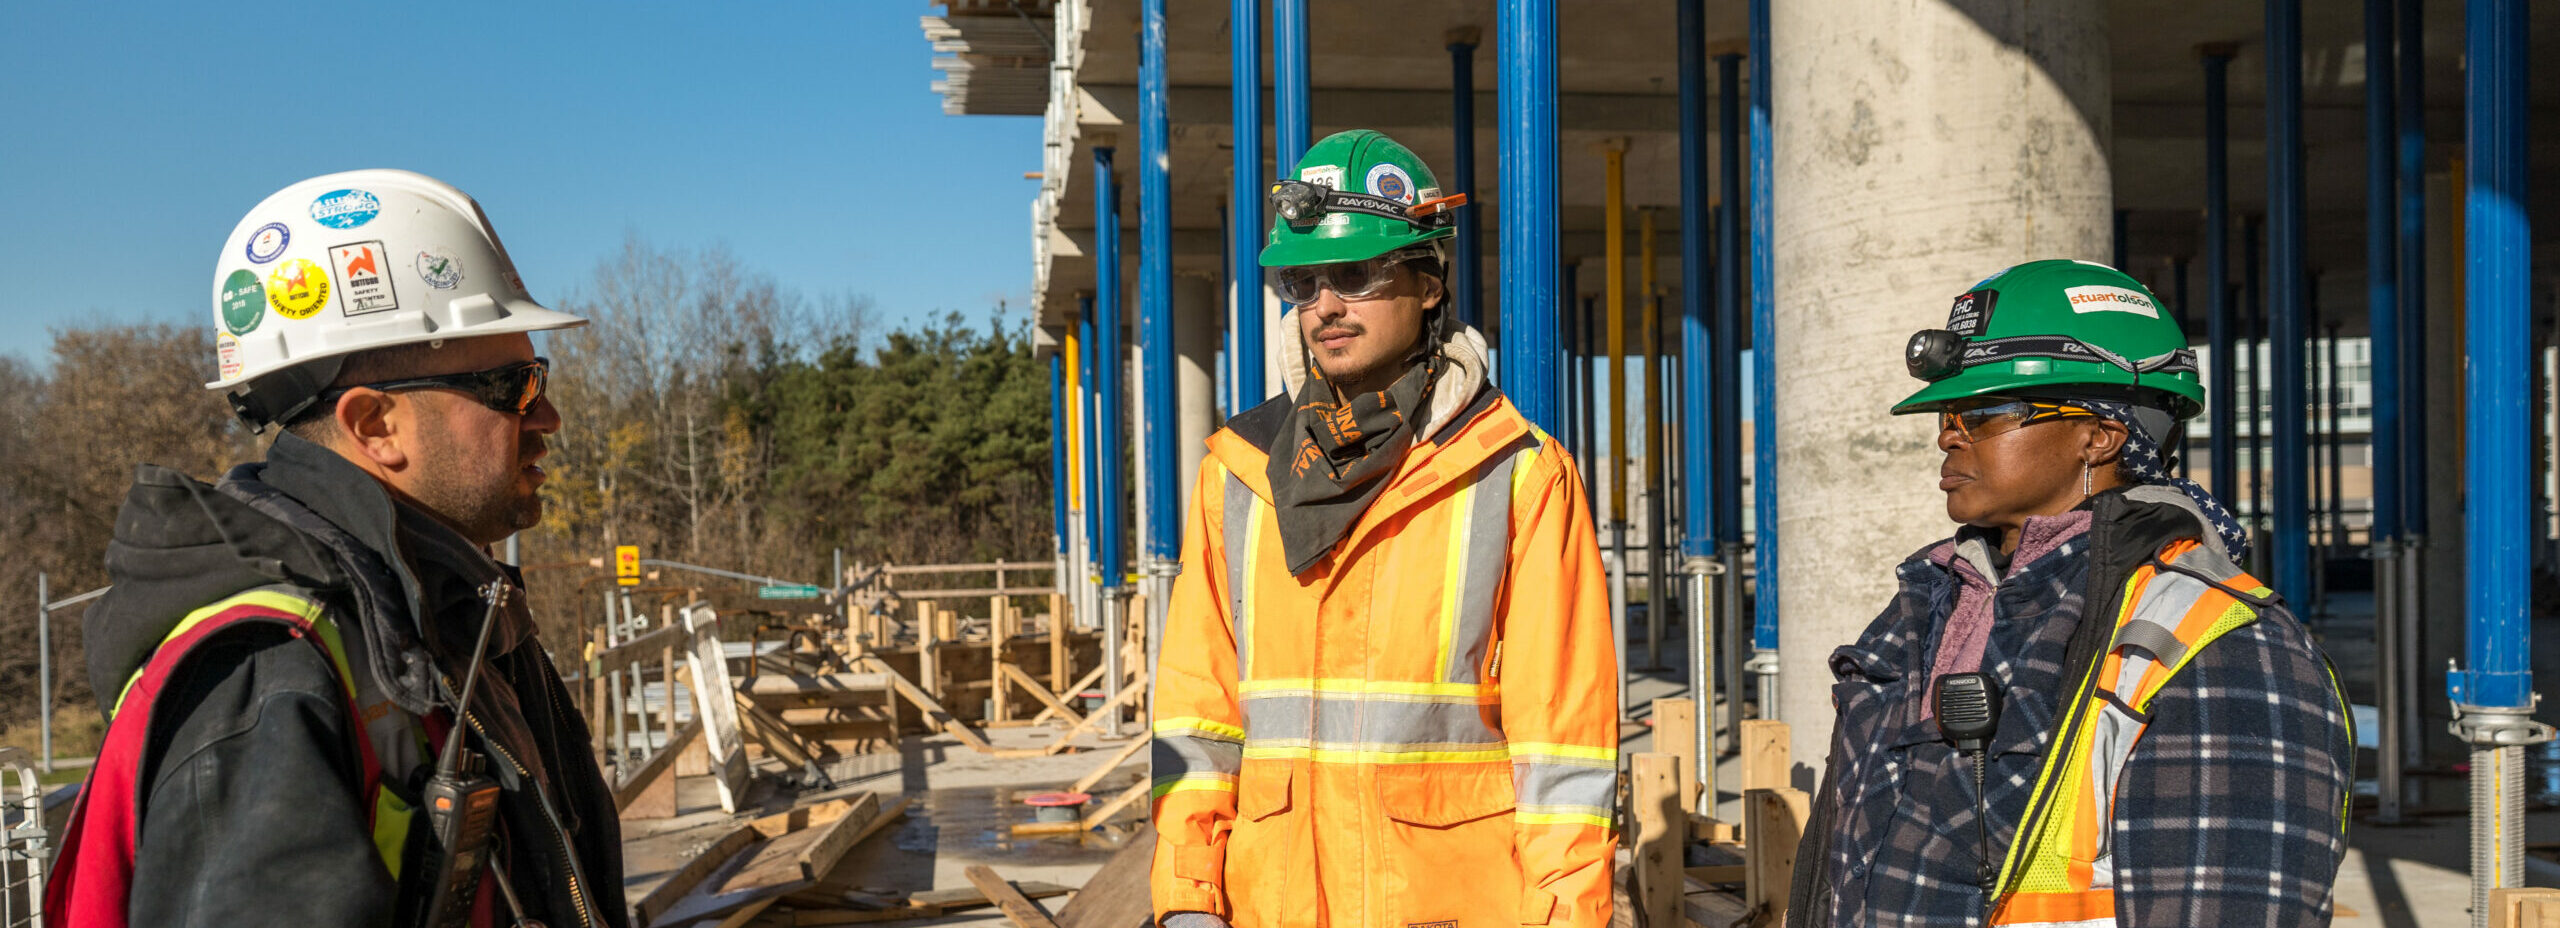 Apprentices at Markham Campus construction site